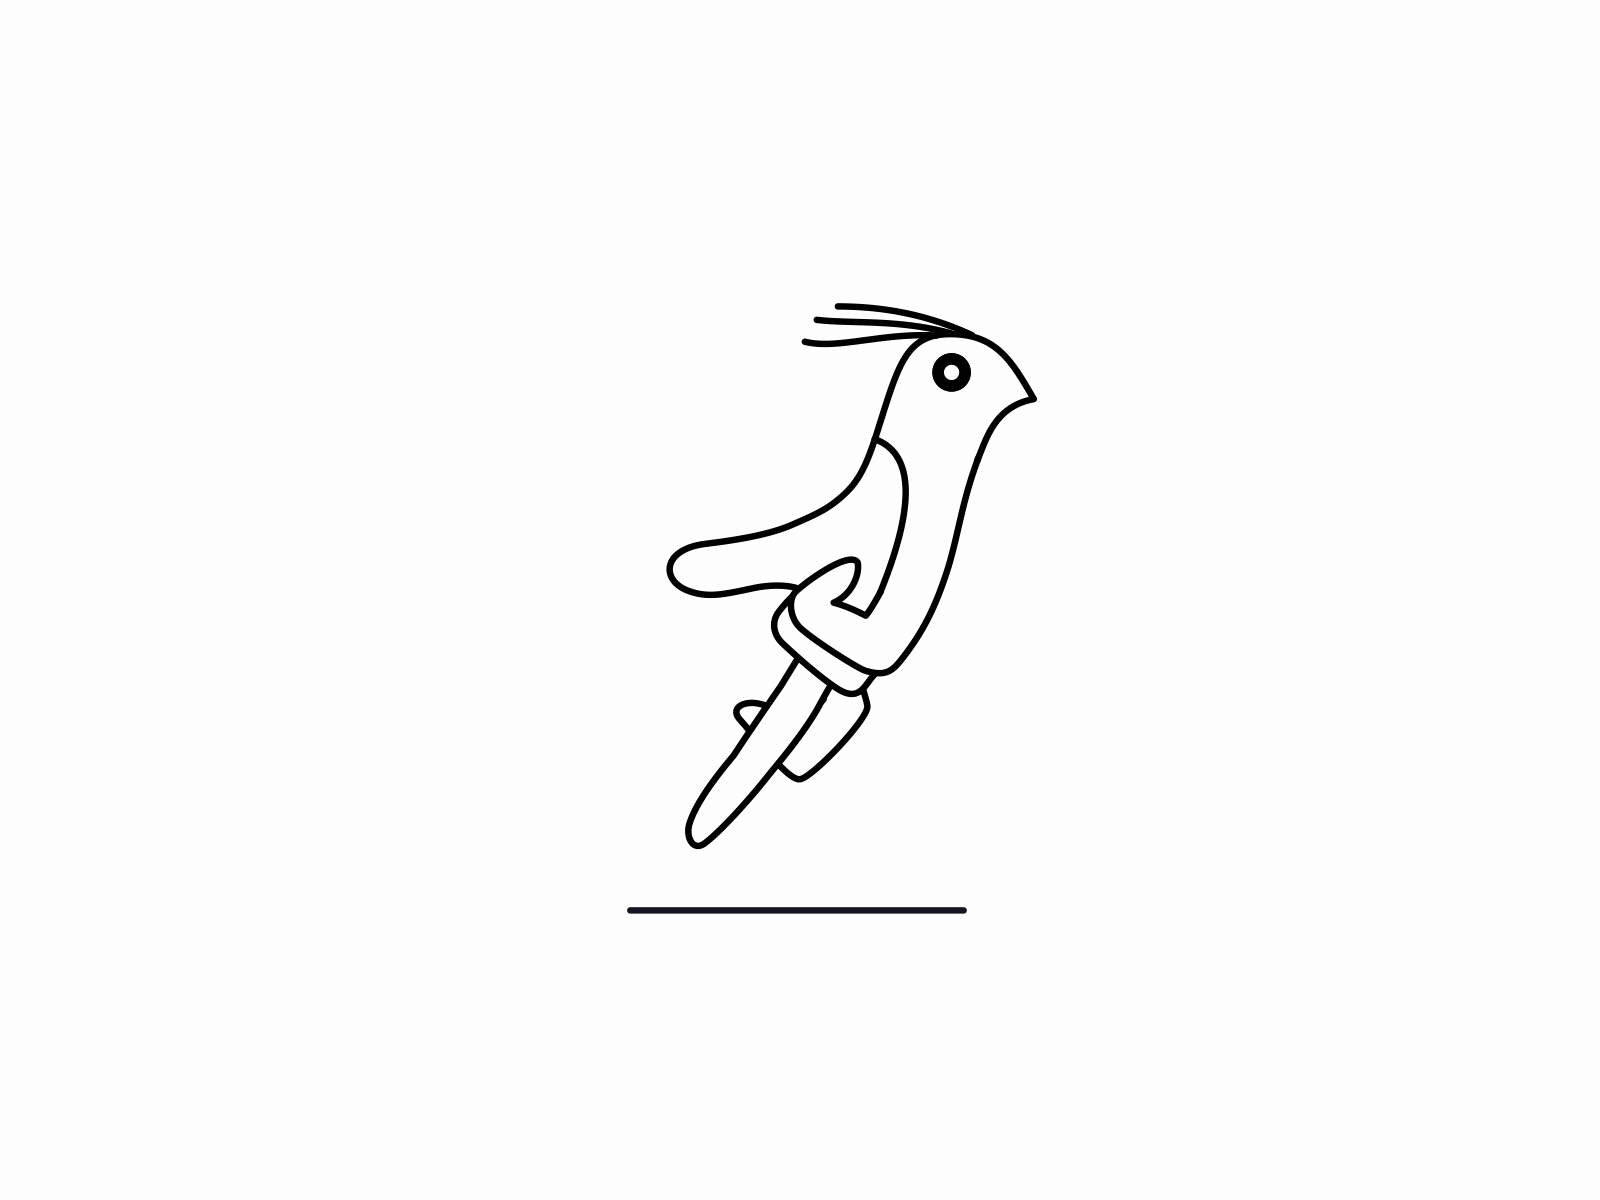 finger animation - the bird